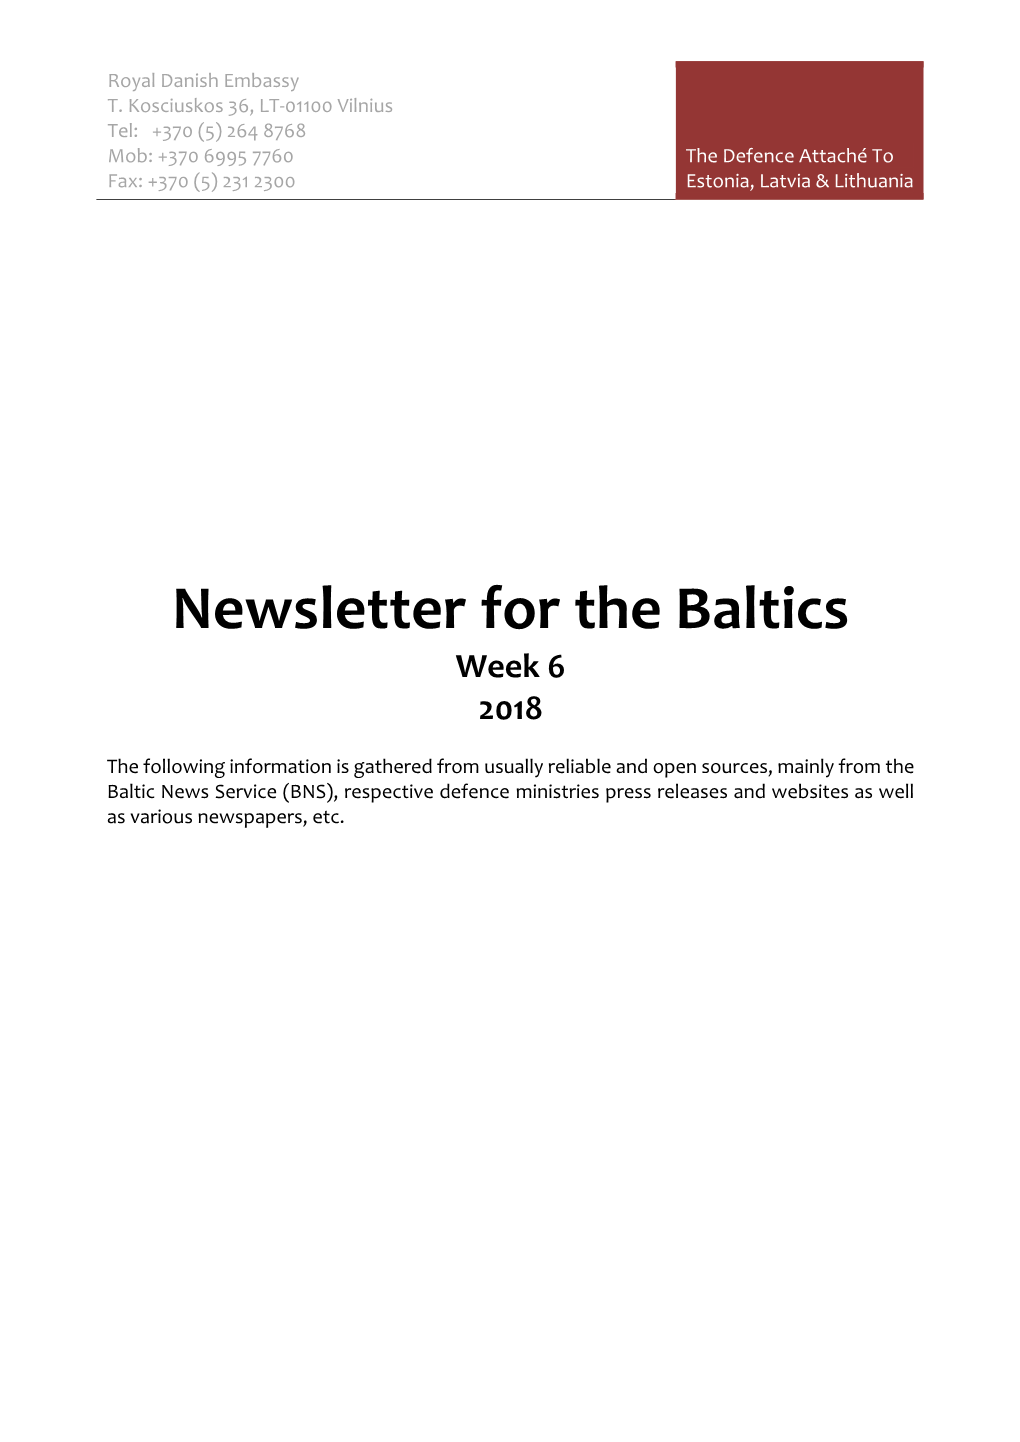 Newsletter for the Baltics Week 6 2018